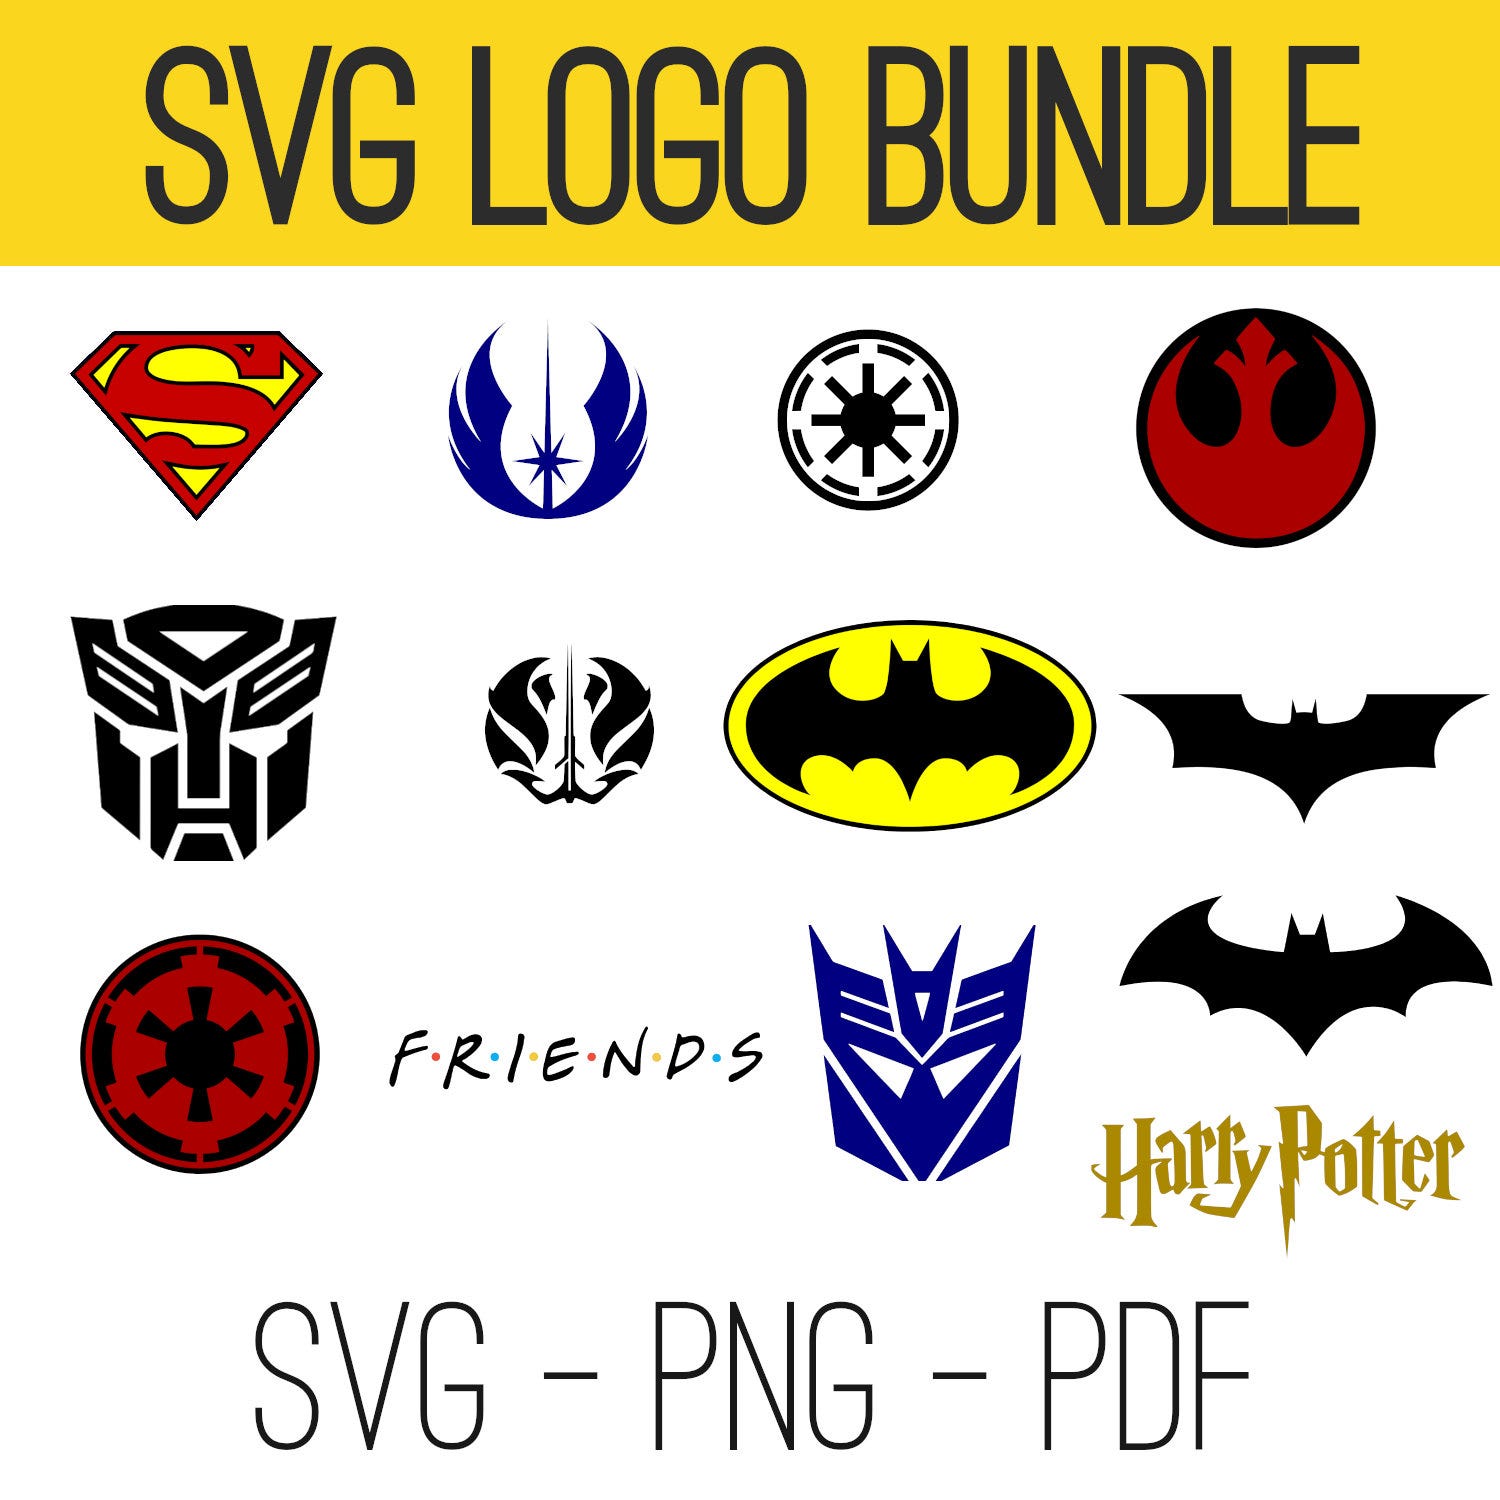 SVG Logo Bundle